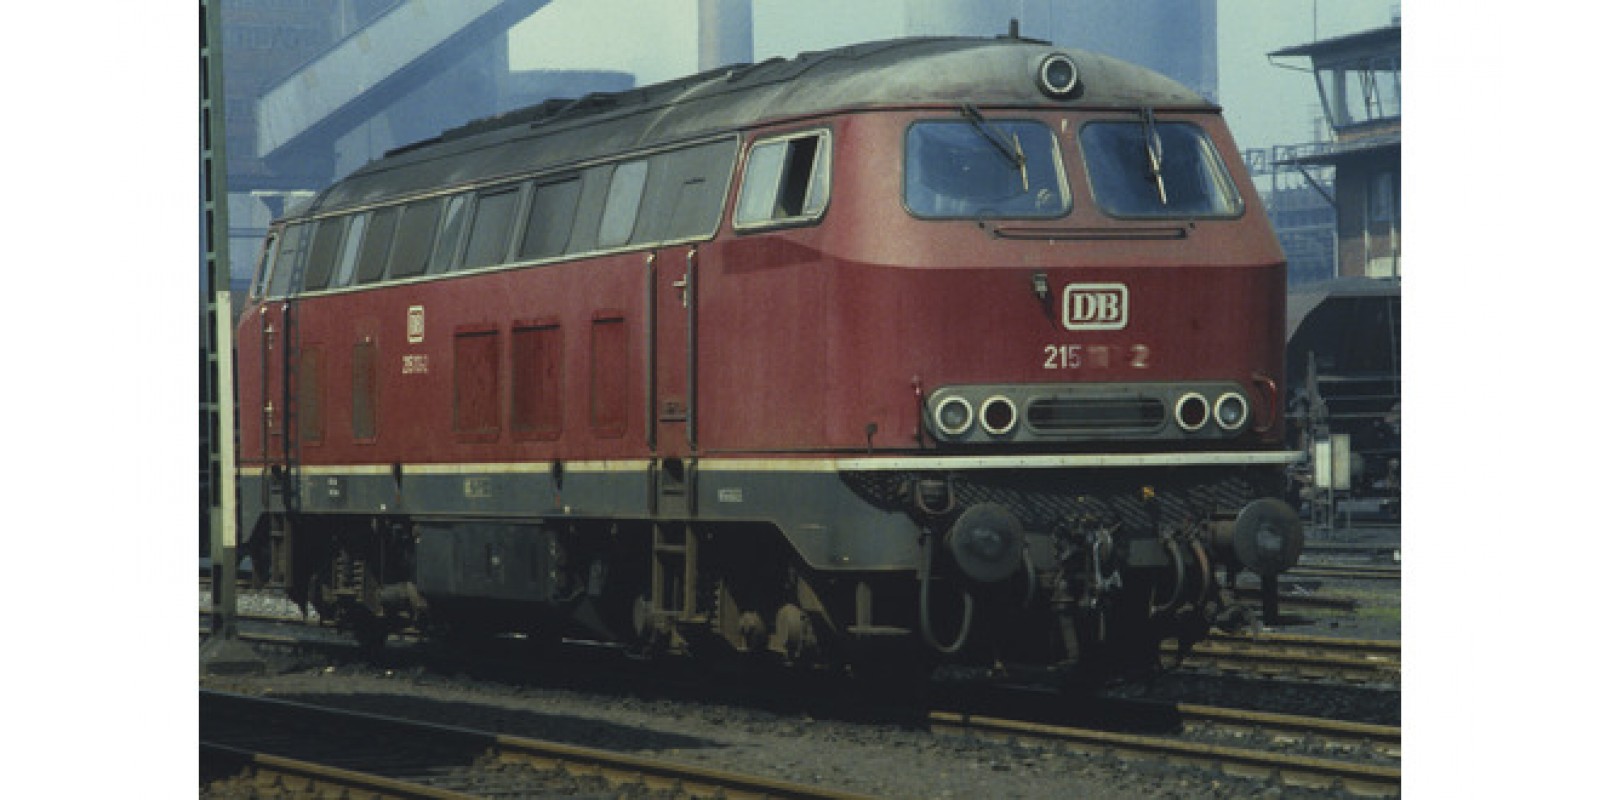 FL424073 - Diesel locomotive class 215, DB